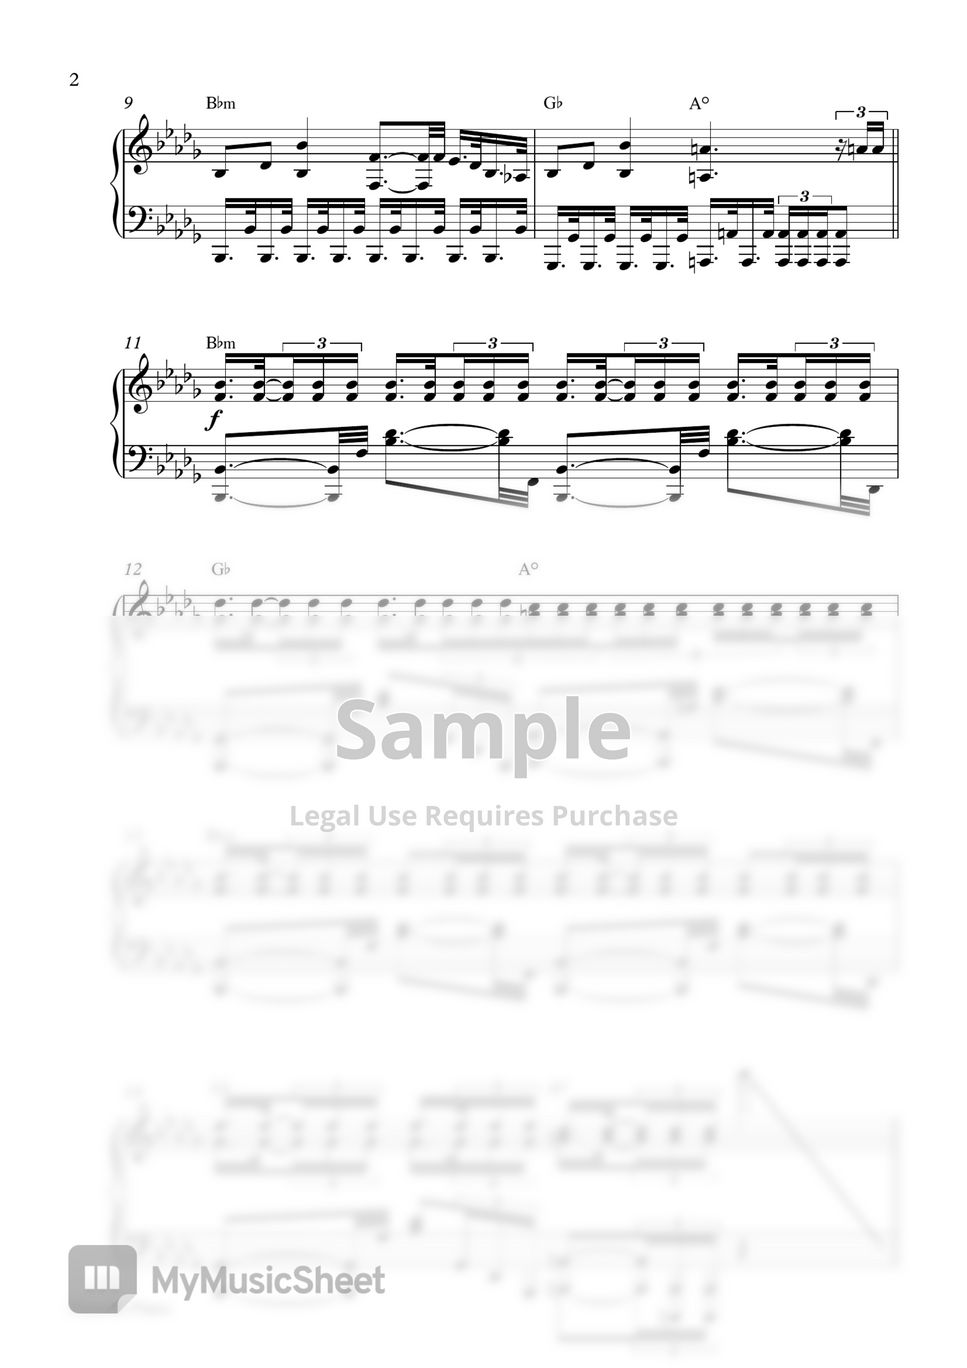 Imagine Dragons - Believer (Piano Sheet) by Pianella Piano